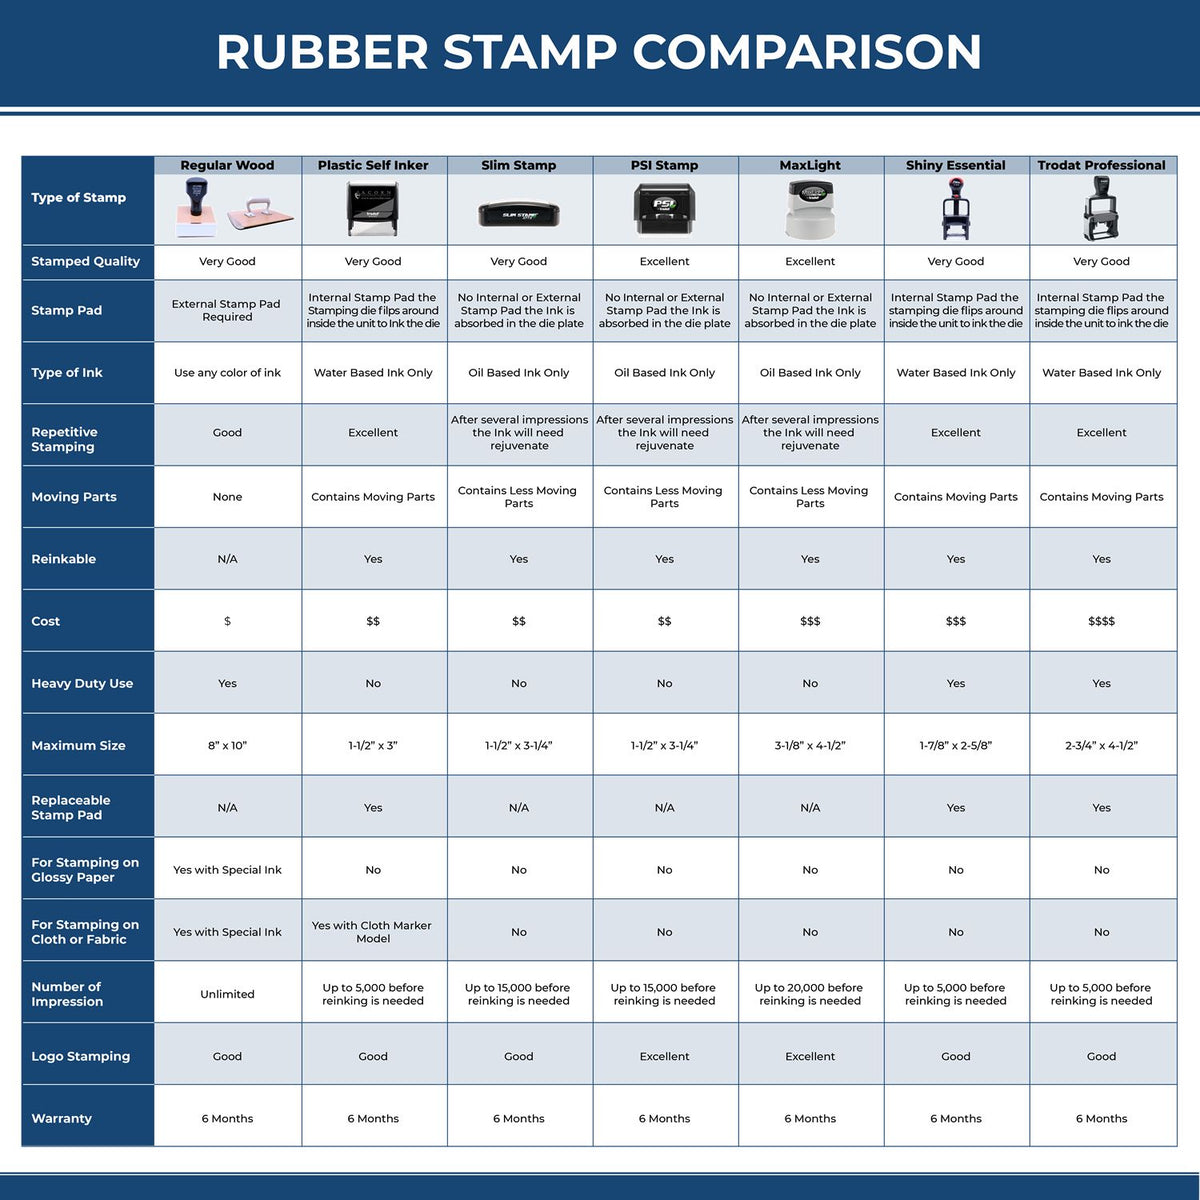 Forester Regular Rubber Stamp of Seal 3005FOR Rubber Stamp Comparison